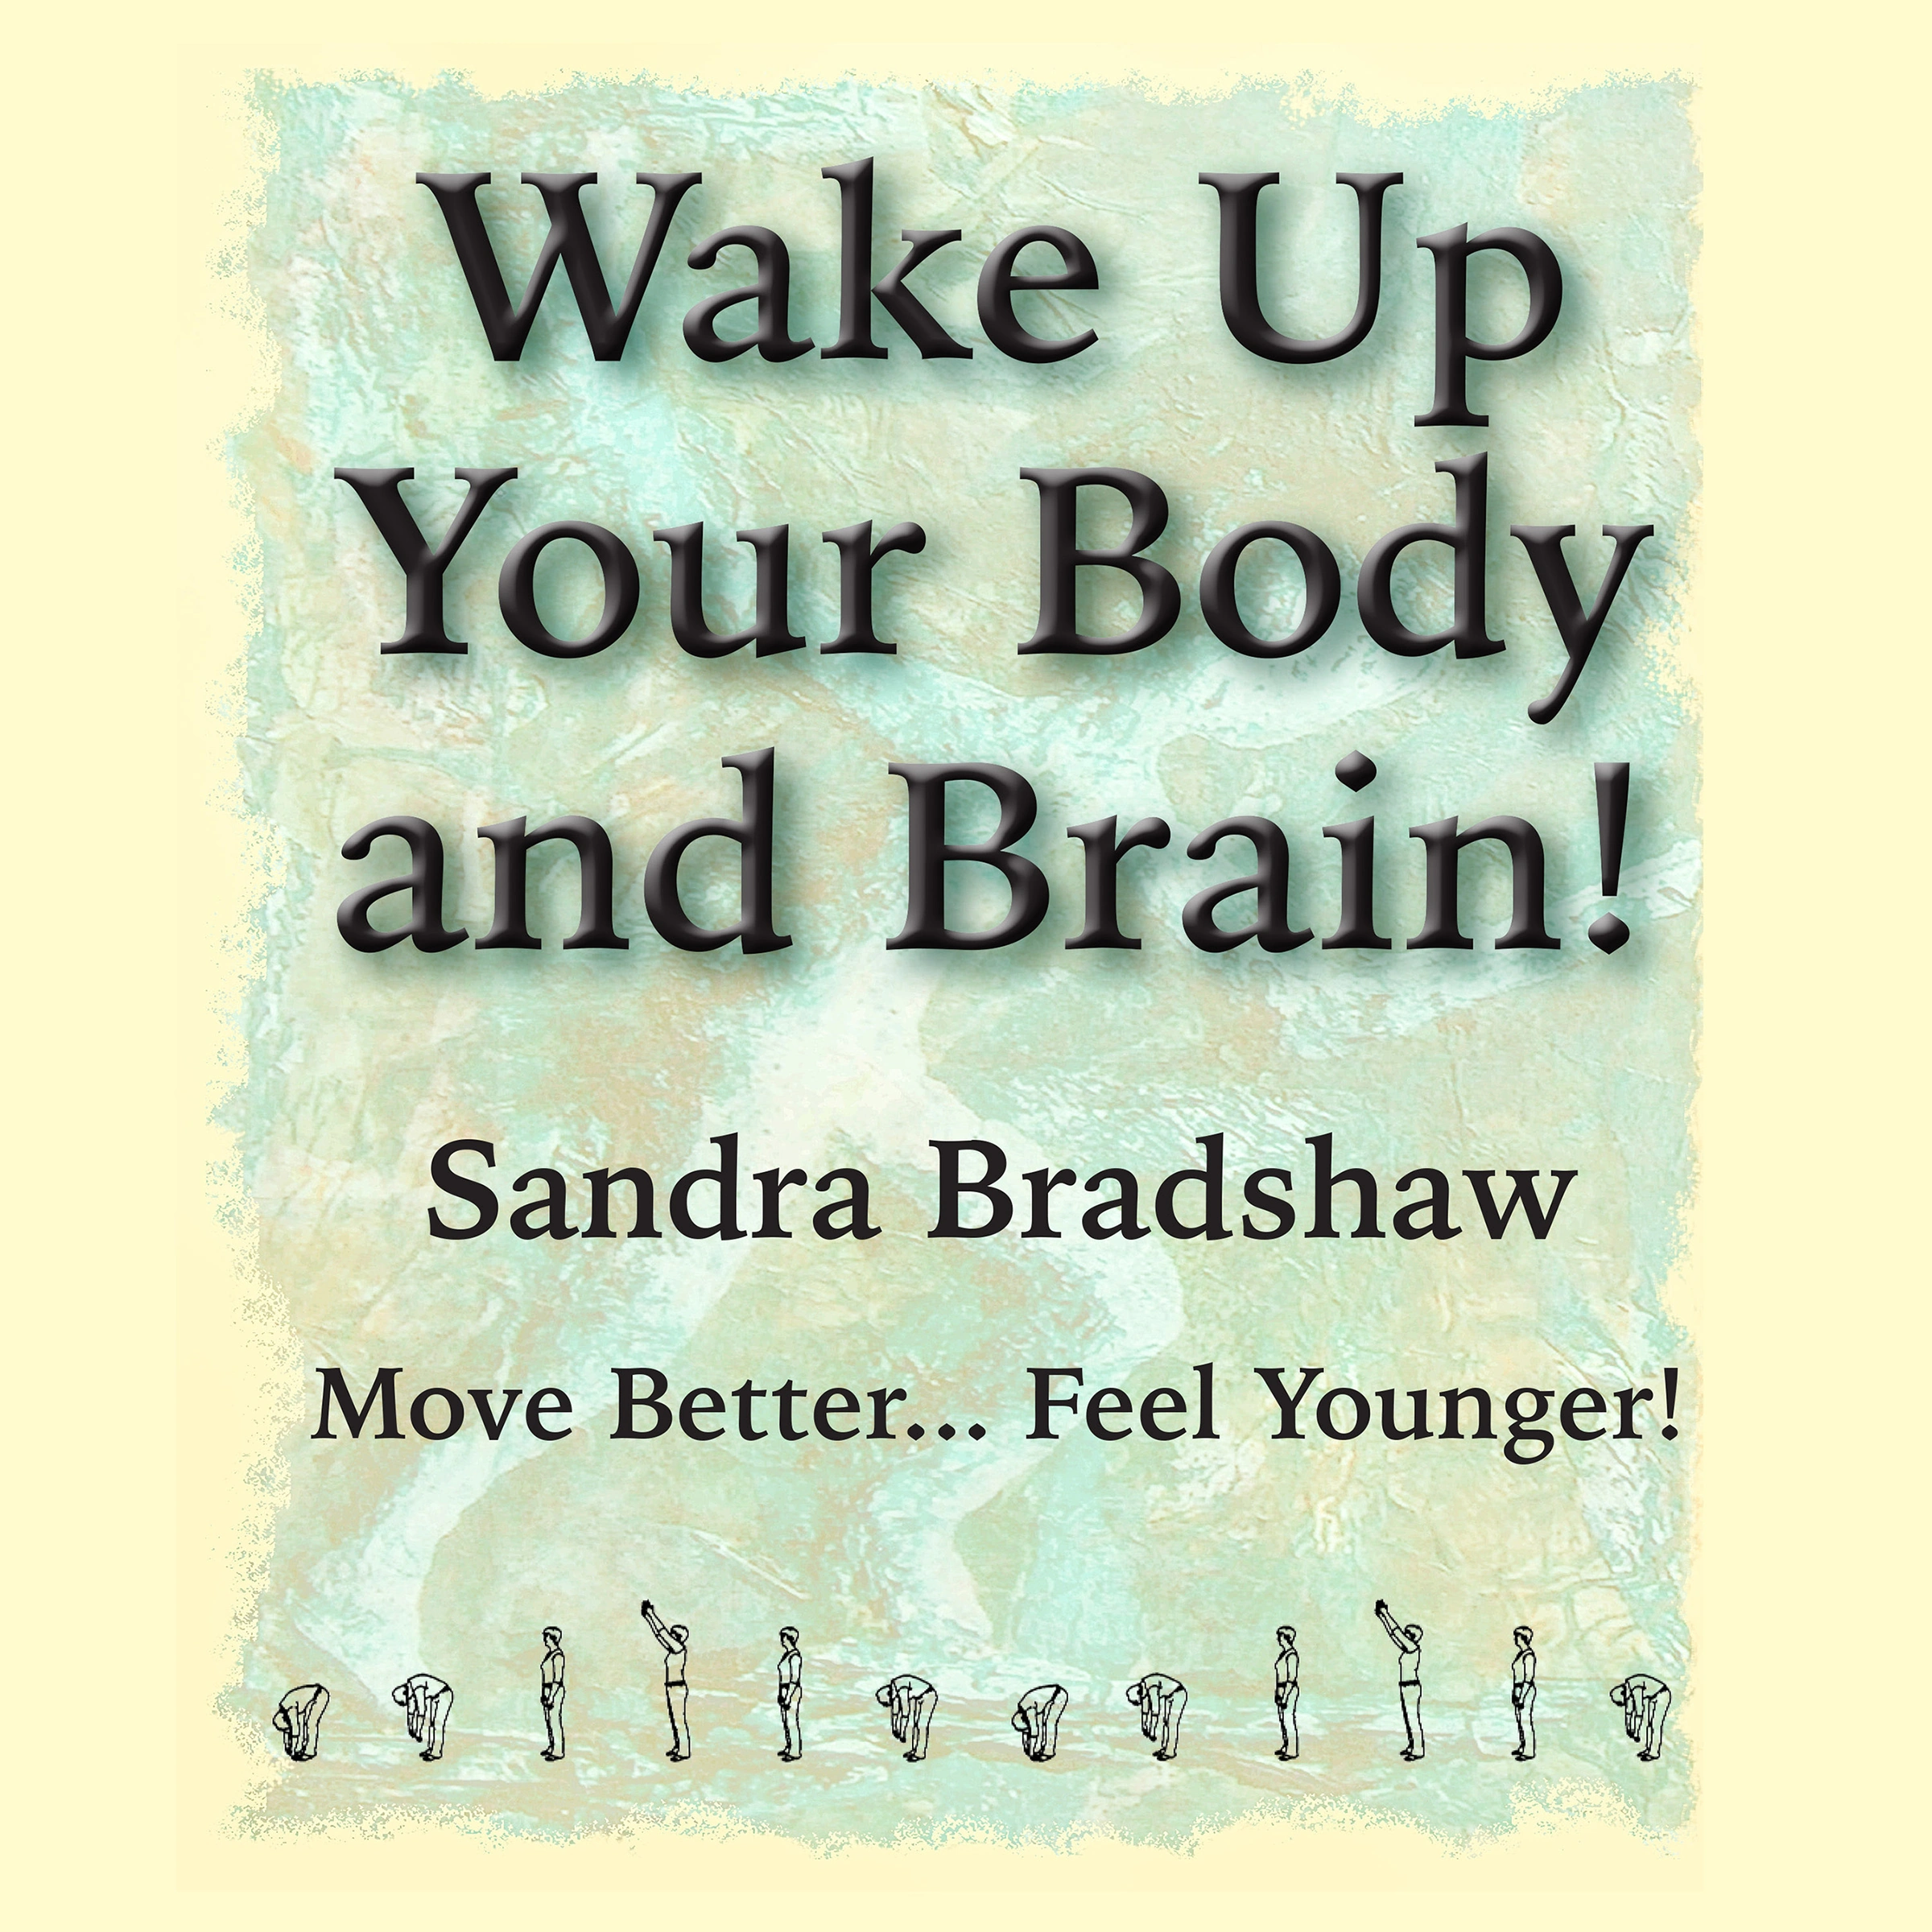 Wake Up Your Body and Brain Audiobook by Sandra Bradshaw